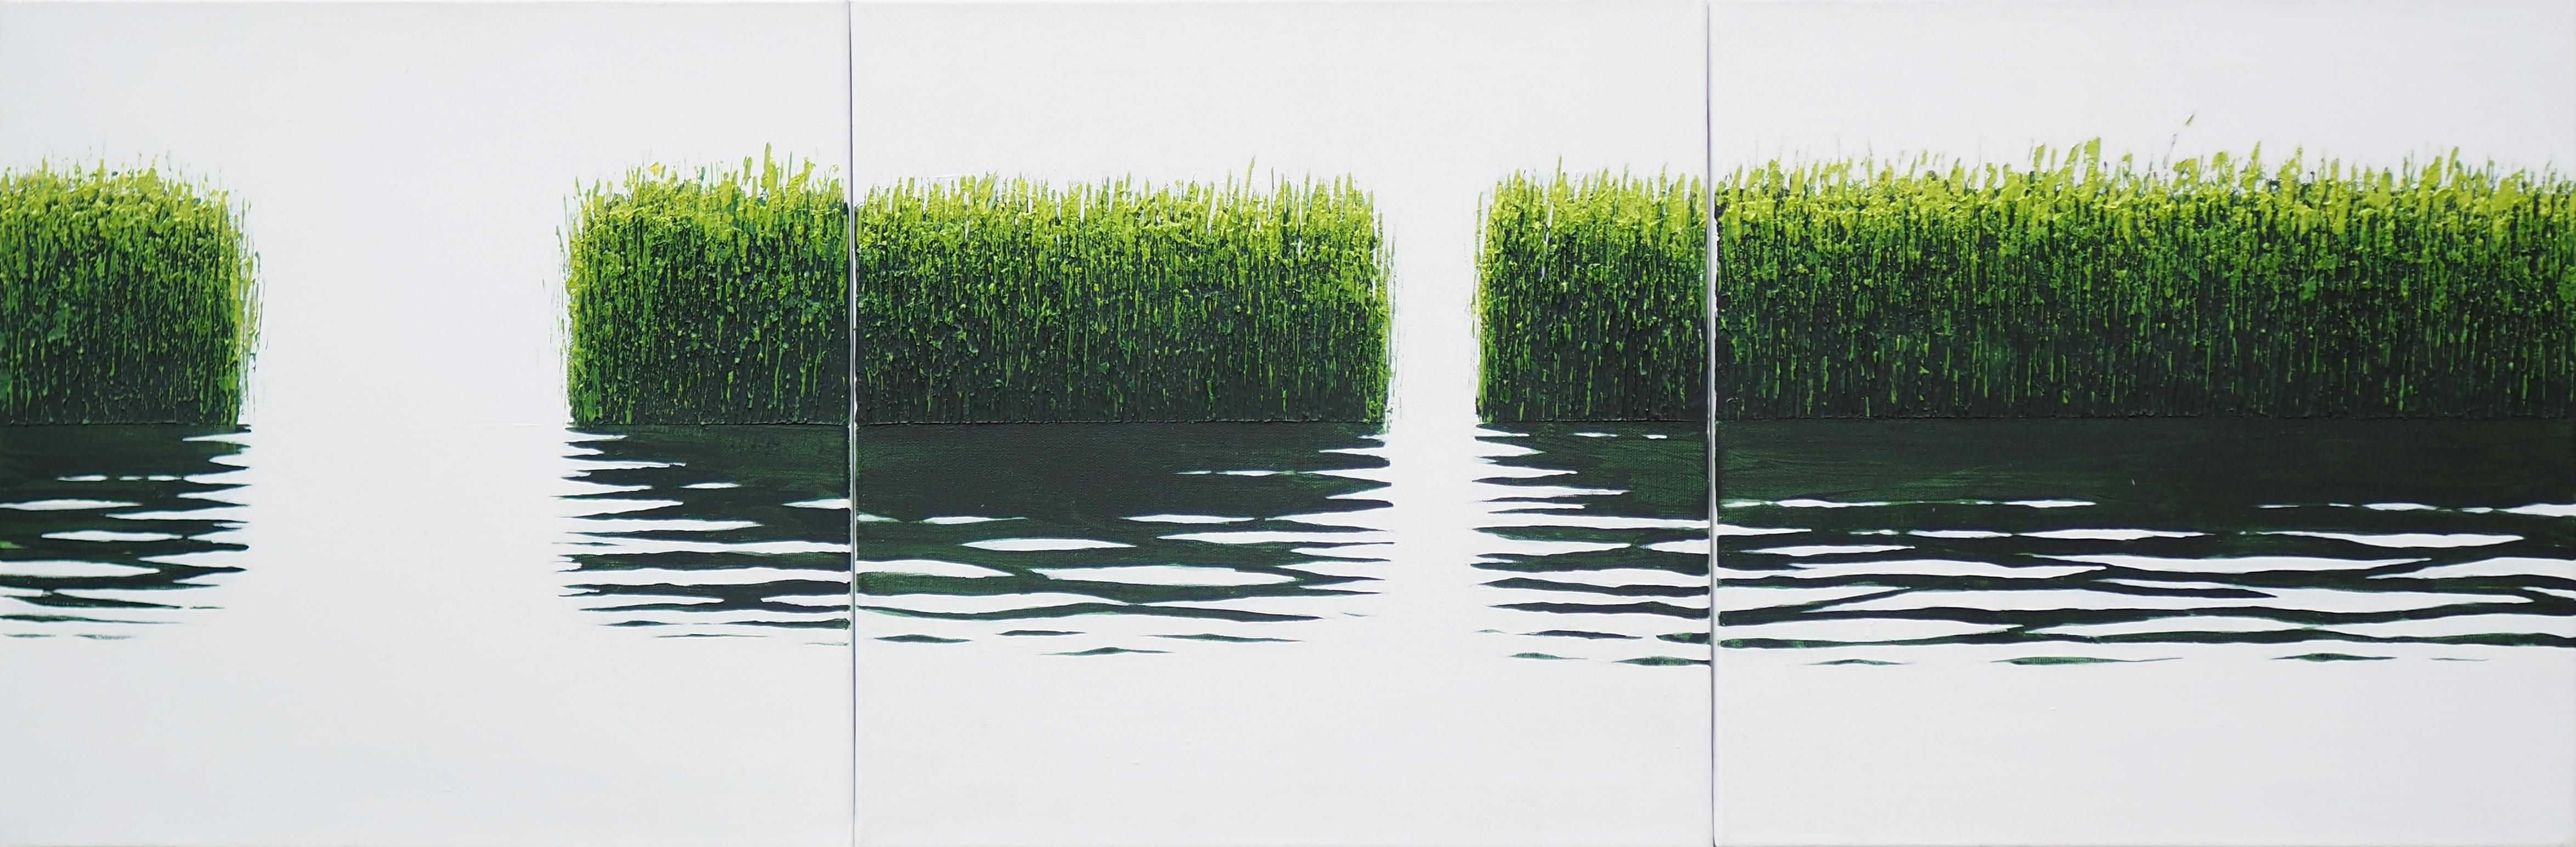 GRASSES V Triptychon - Atmosphärische Landschaft, moderne Meereslandschaft, Gemälde 